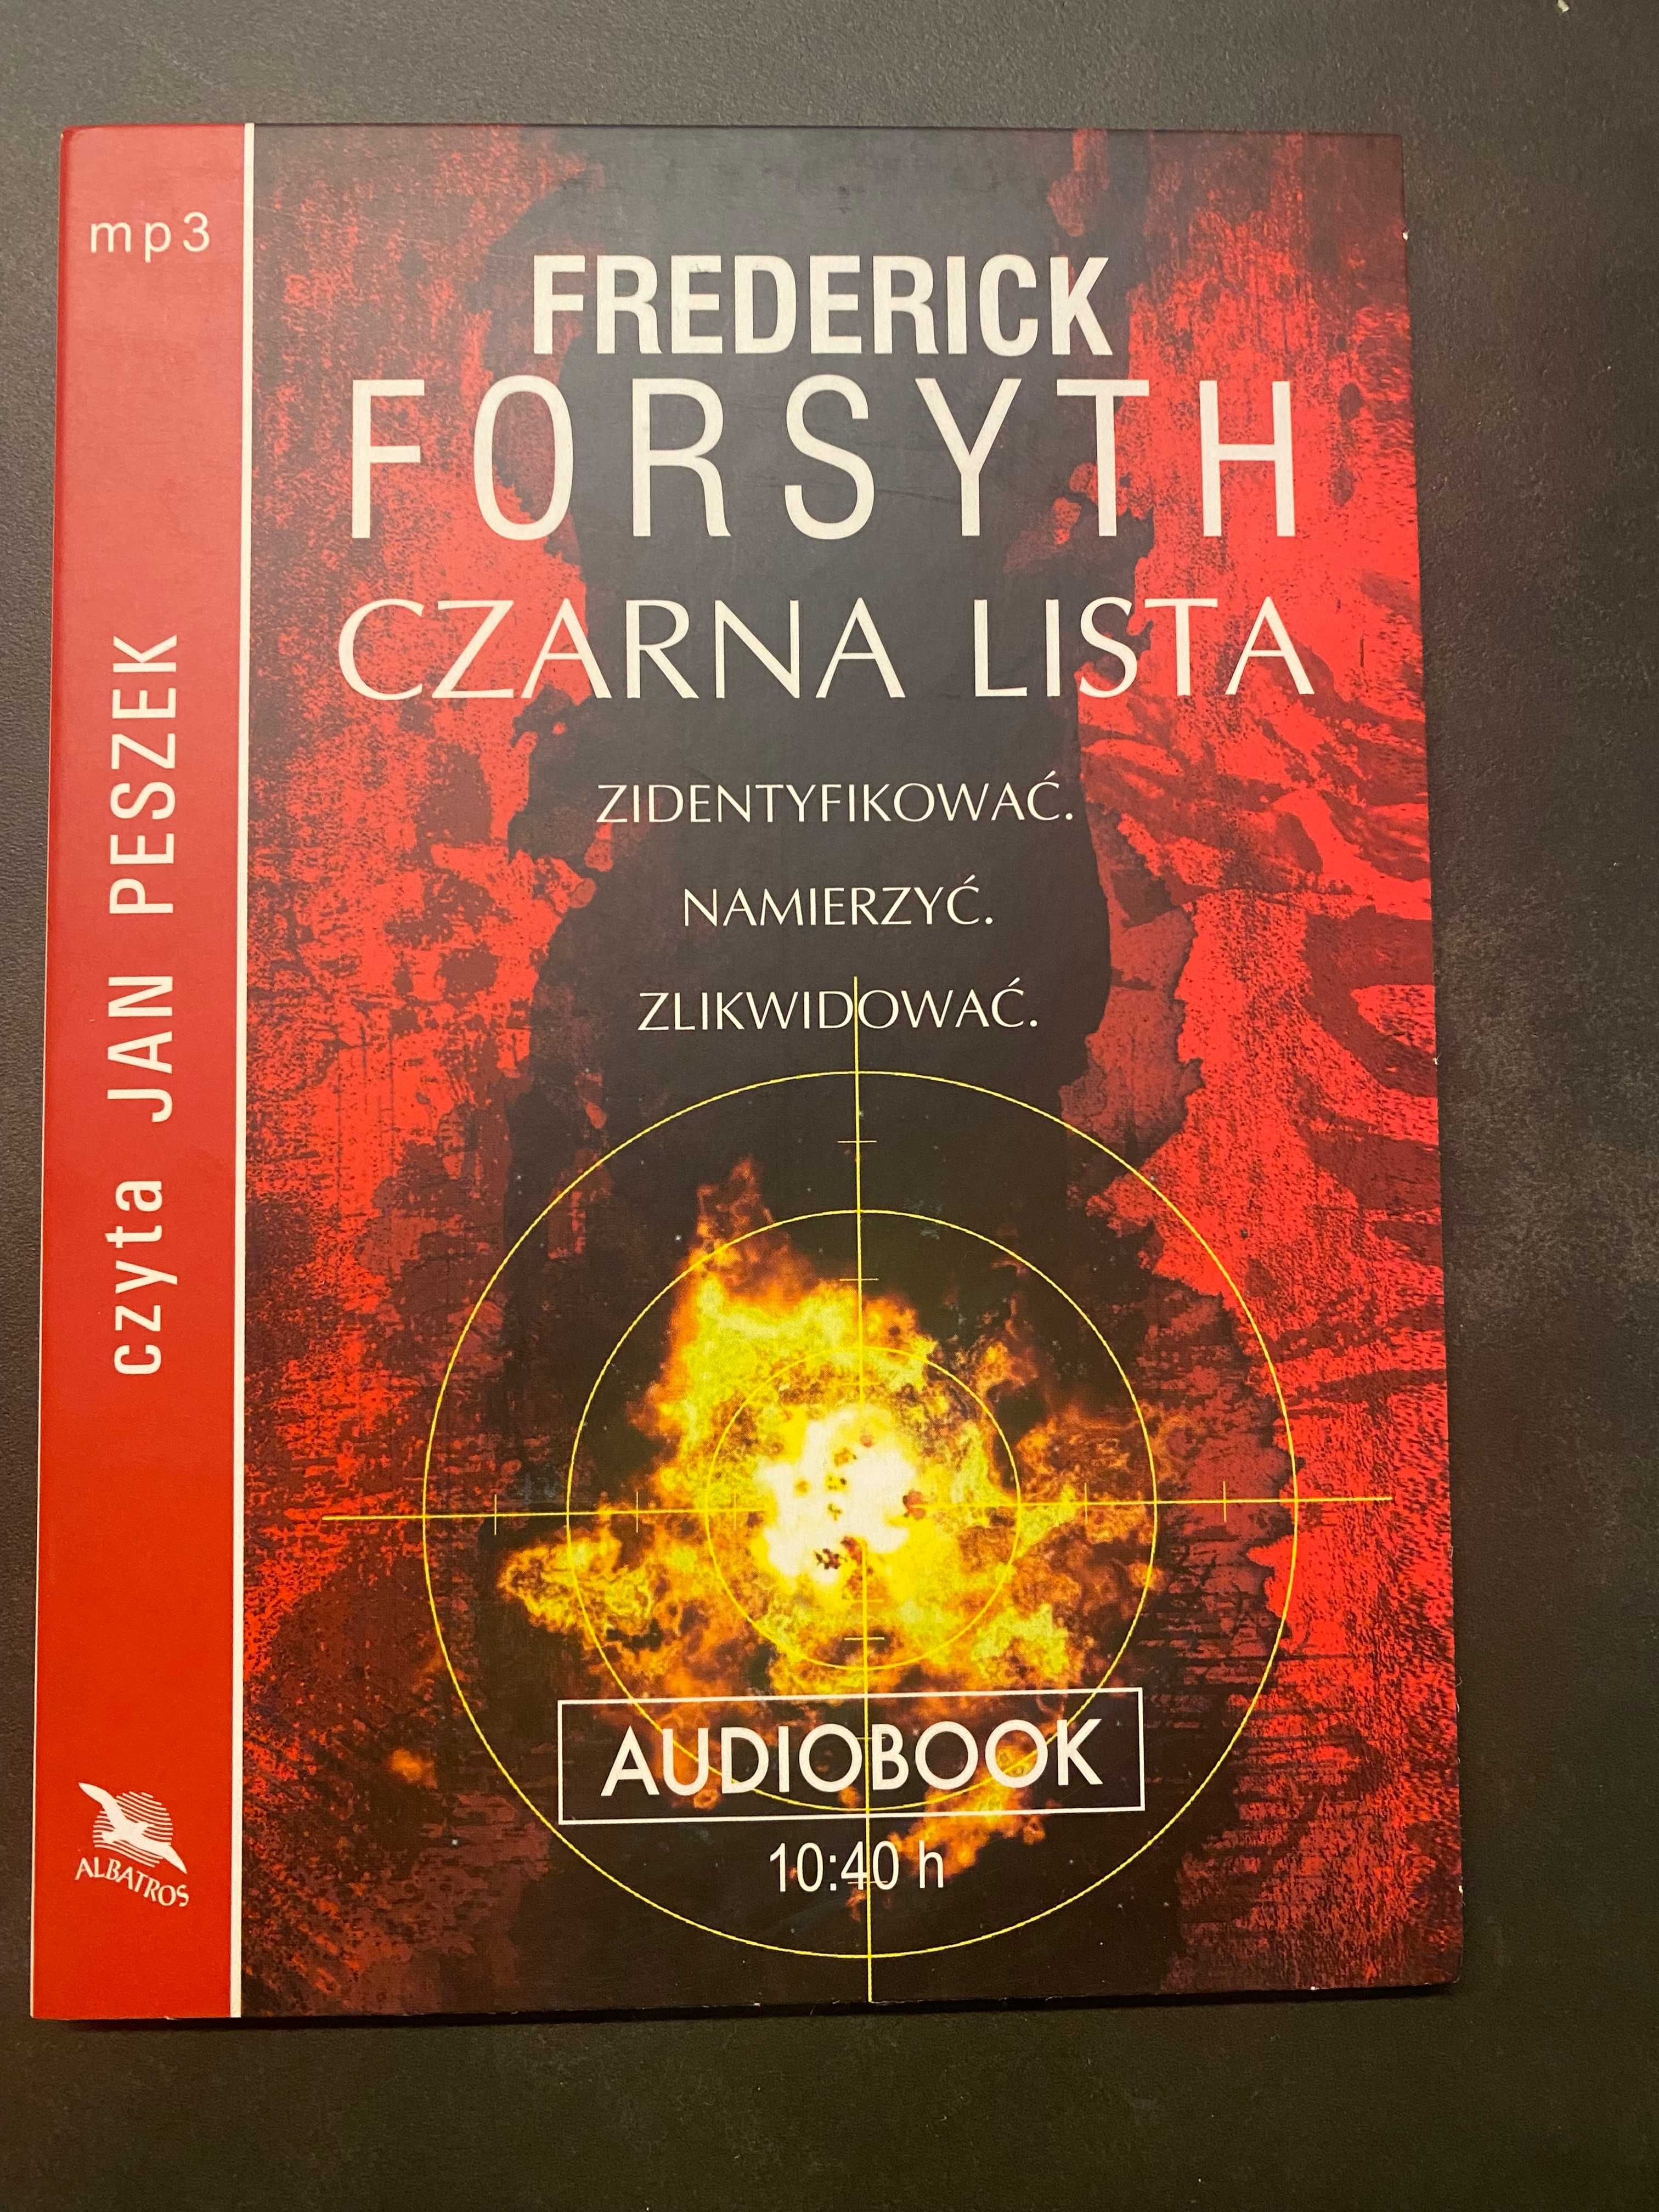 Czarna lista  Frederick Forsyth audiobook CD mp3